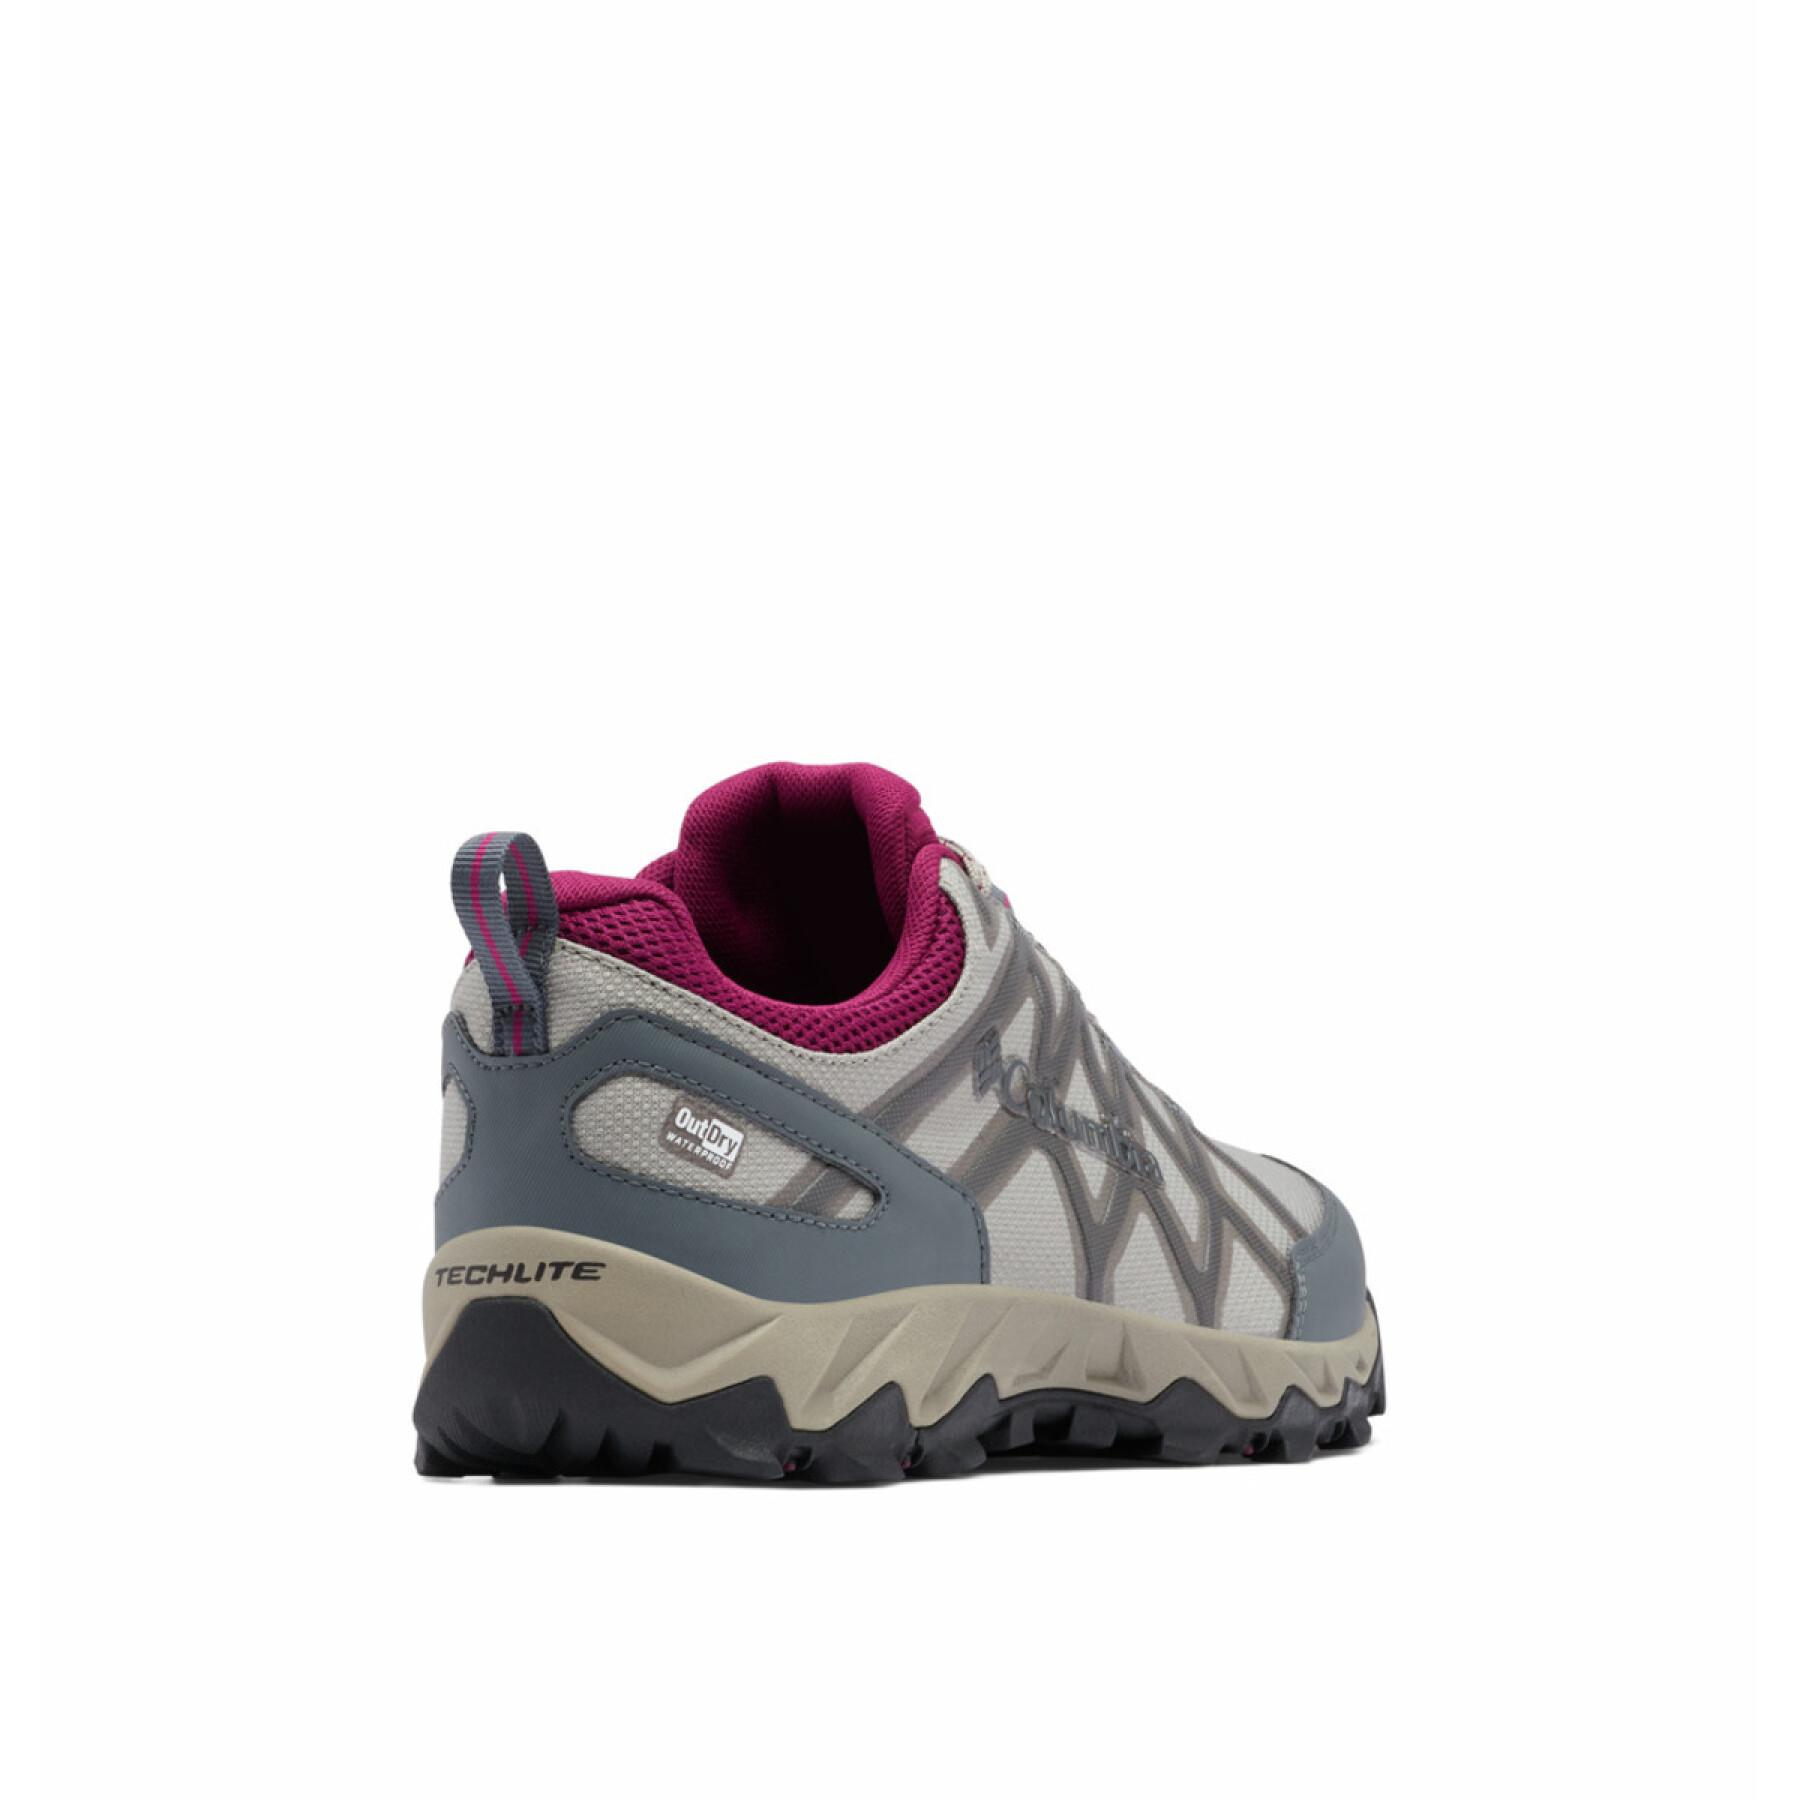 Chaussures de randonnée femme Columbia PEAKFREAK X2 OUTDRY